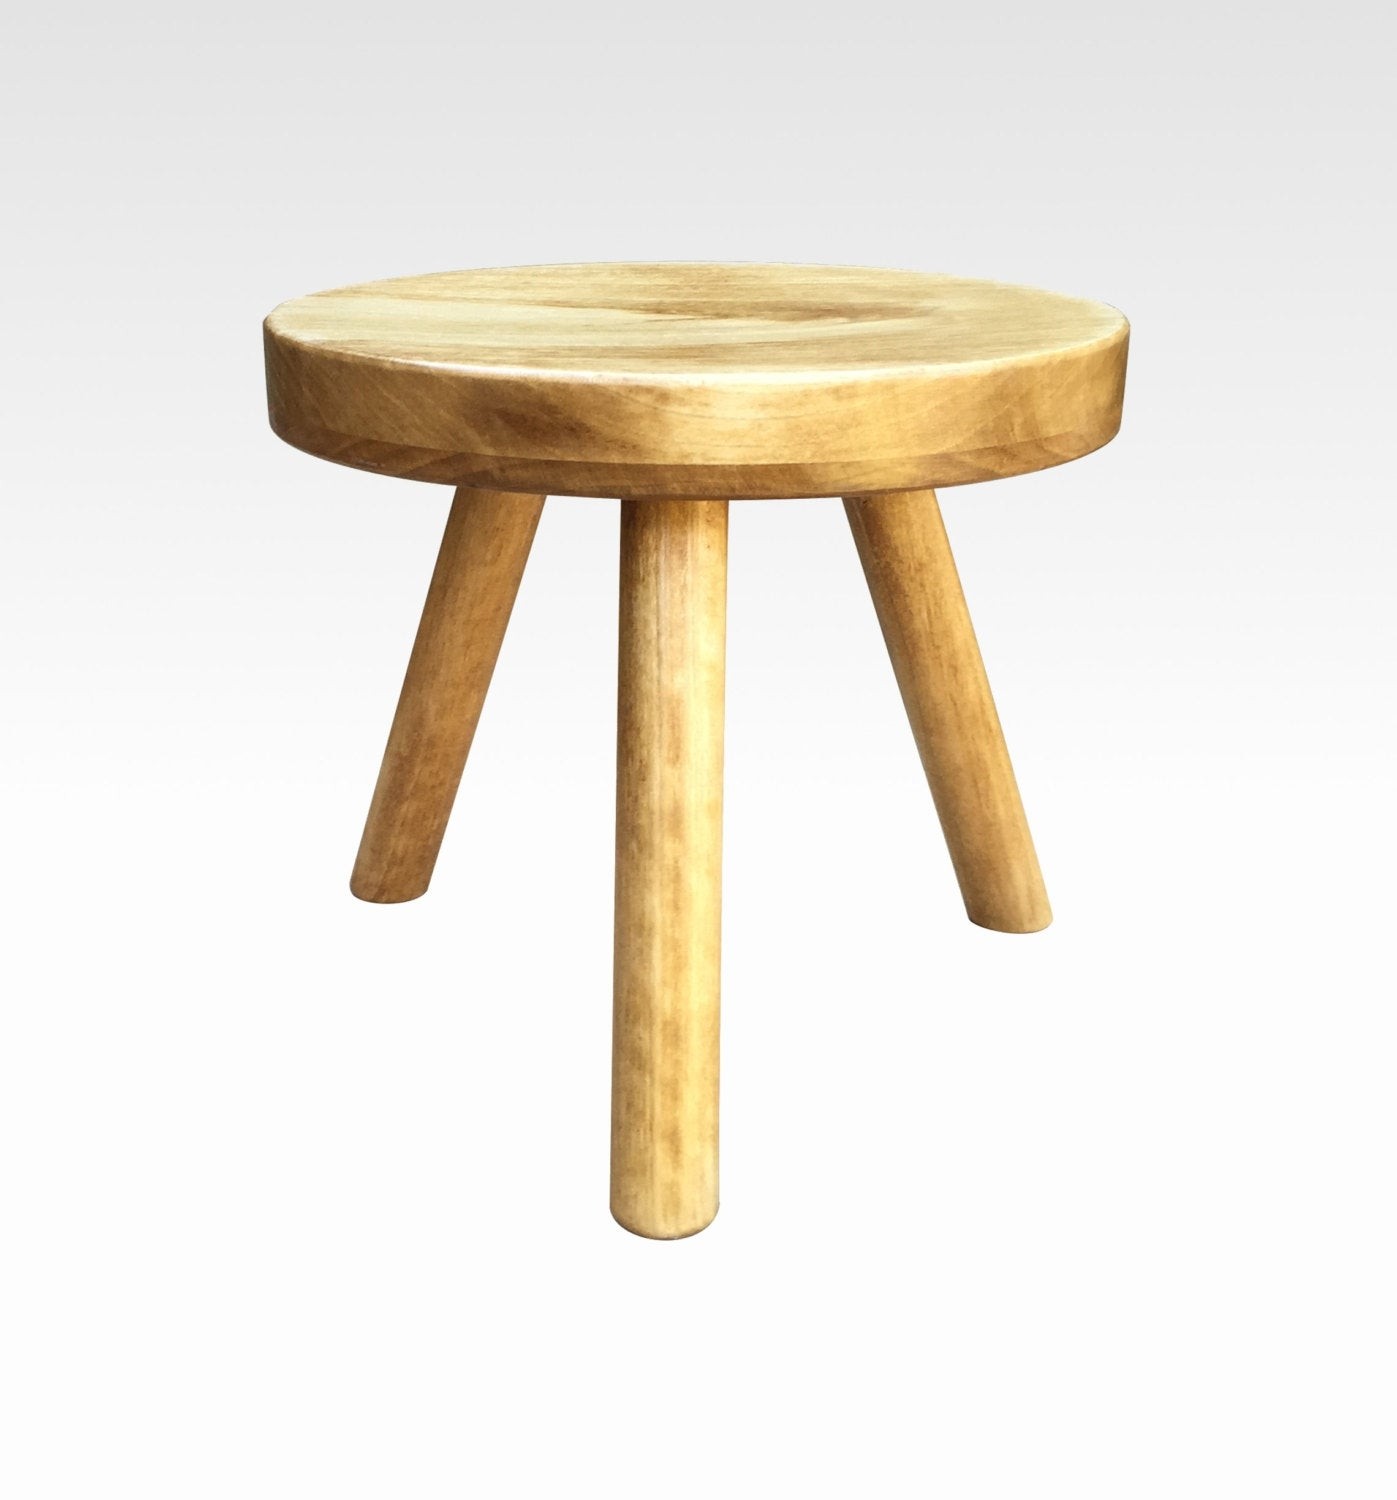 Small wood three legged stool modern plant stand choose